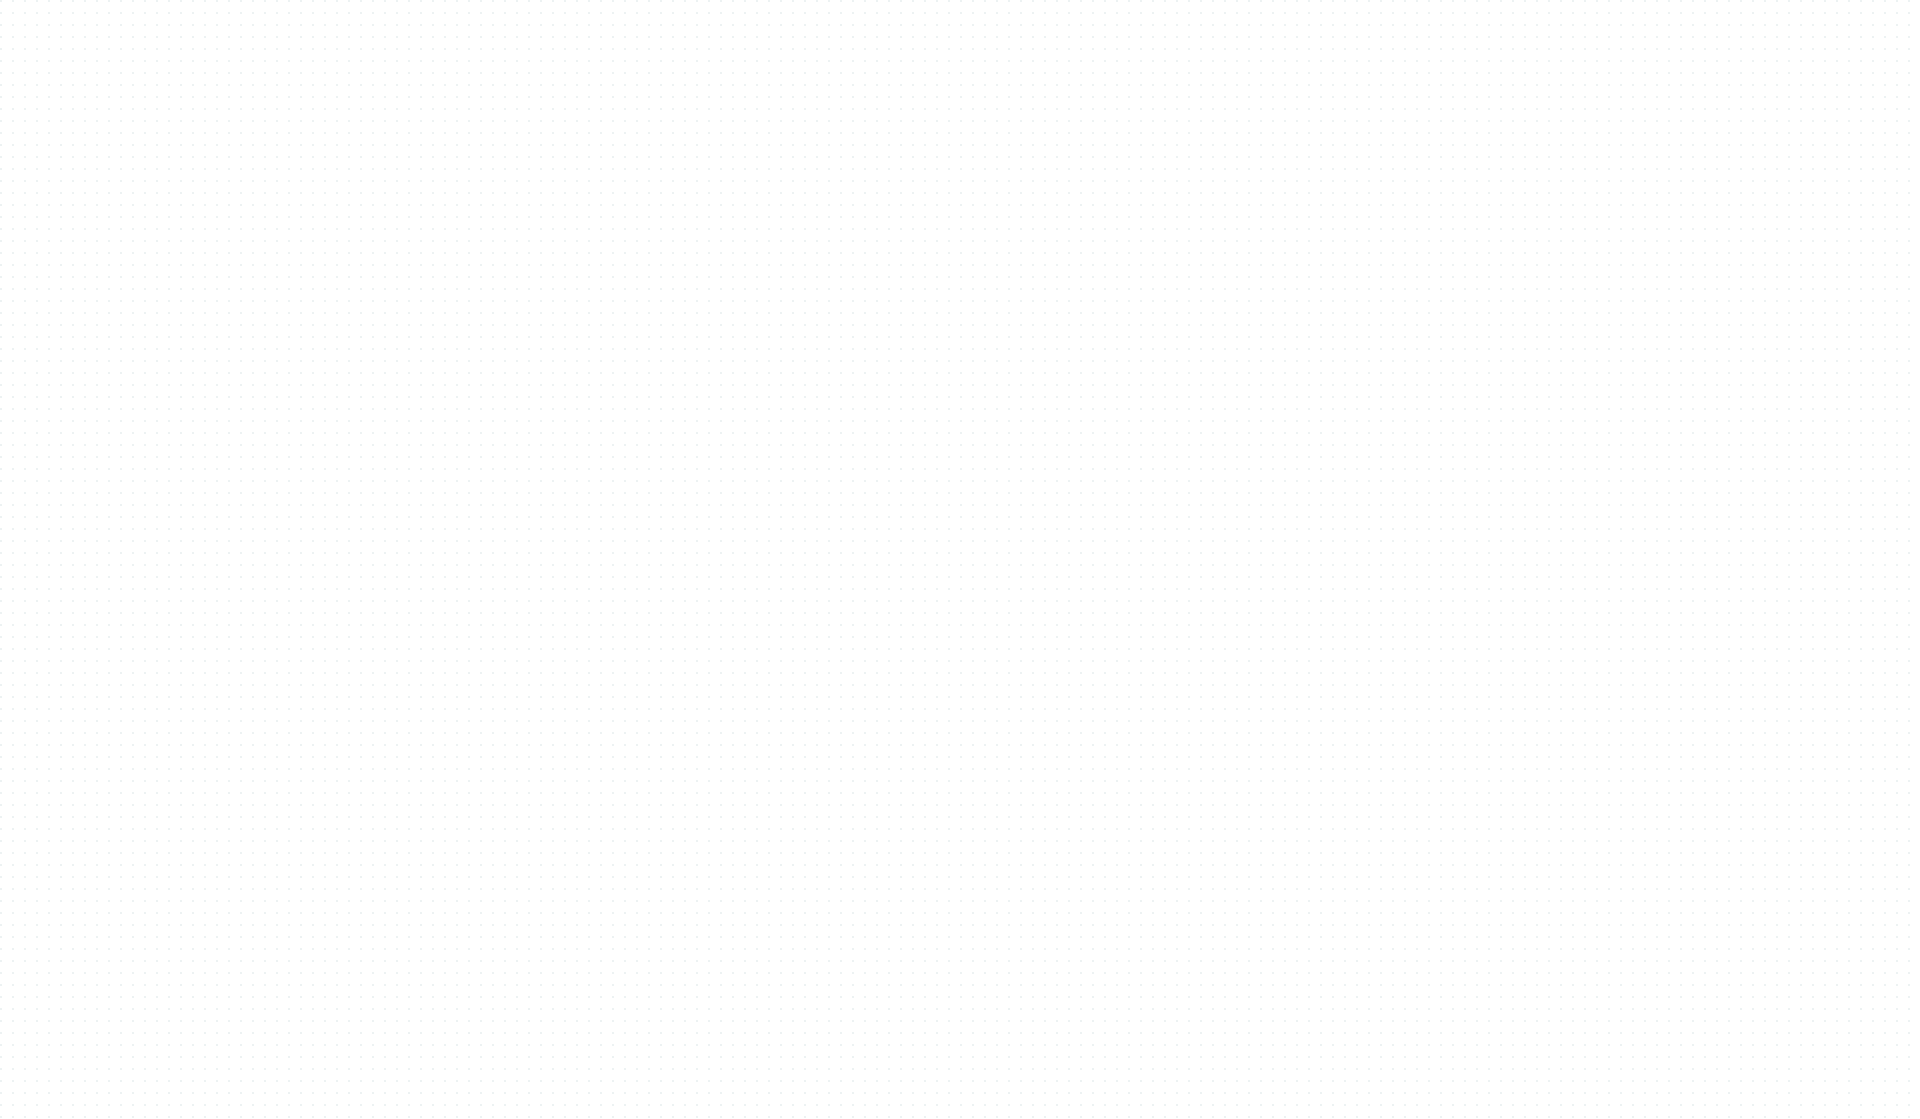 checkered grid background